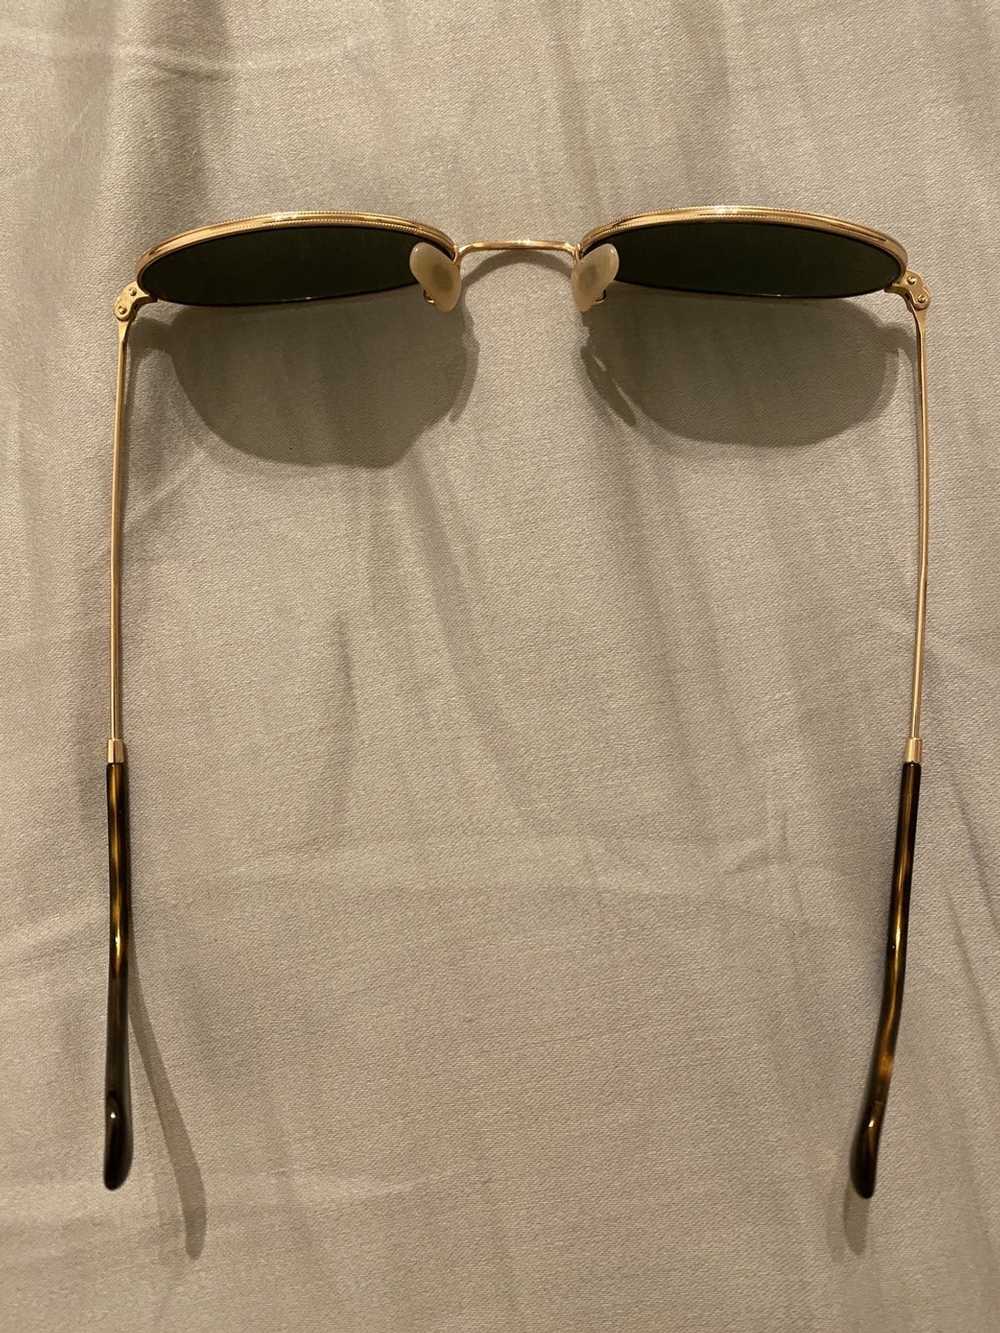 RayBan Ray Ban Gold Flat Oval Sunglasses - image 5